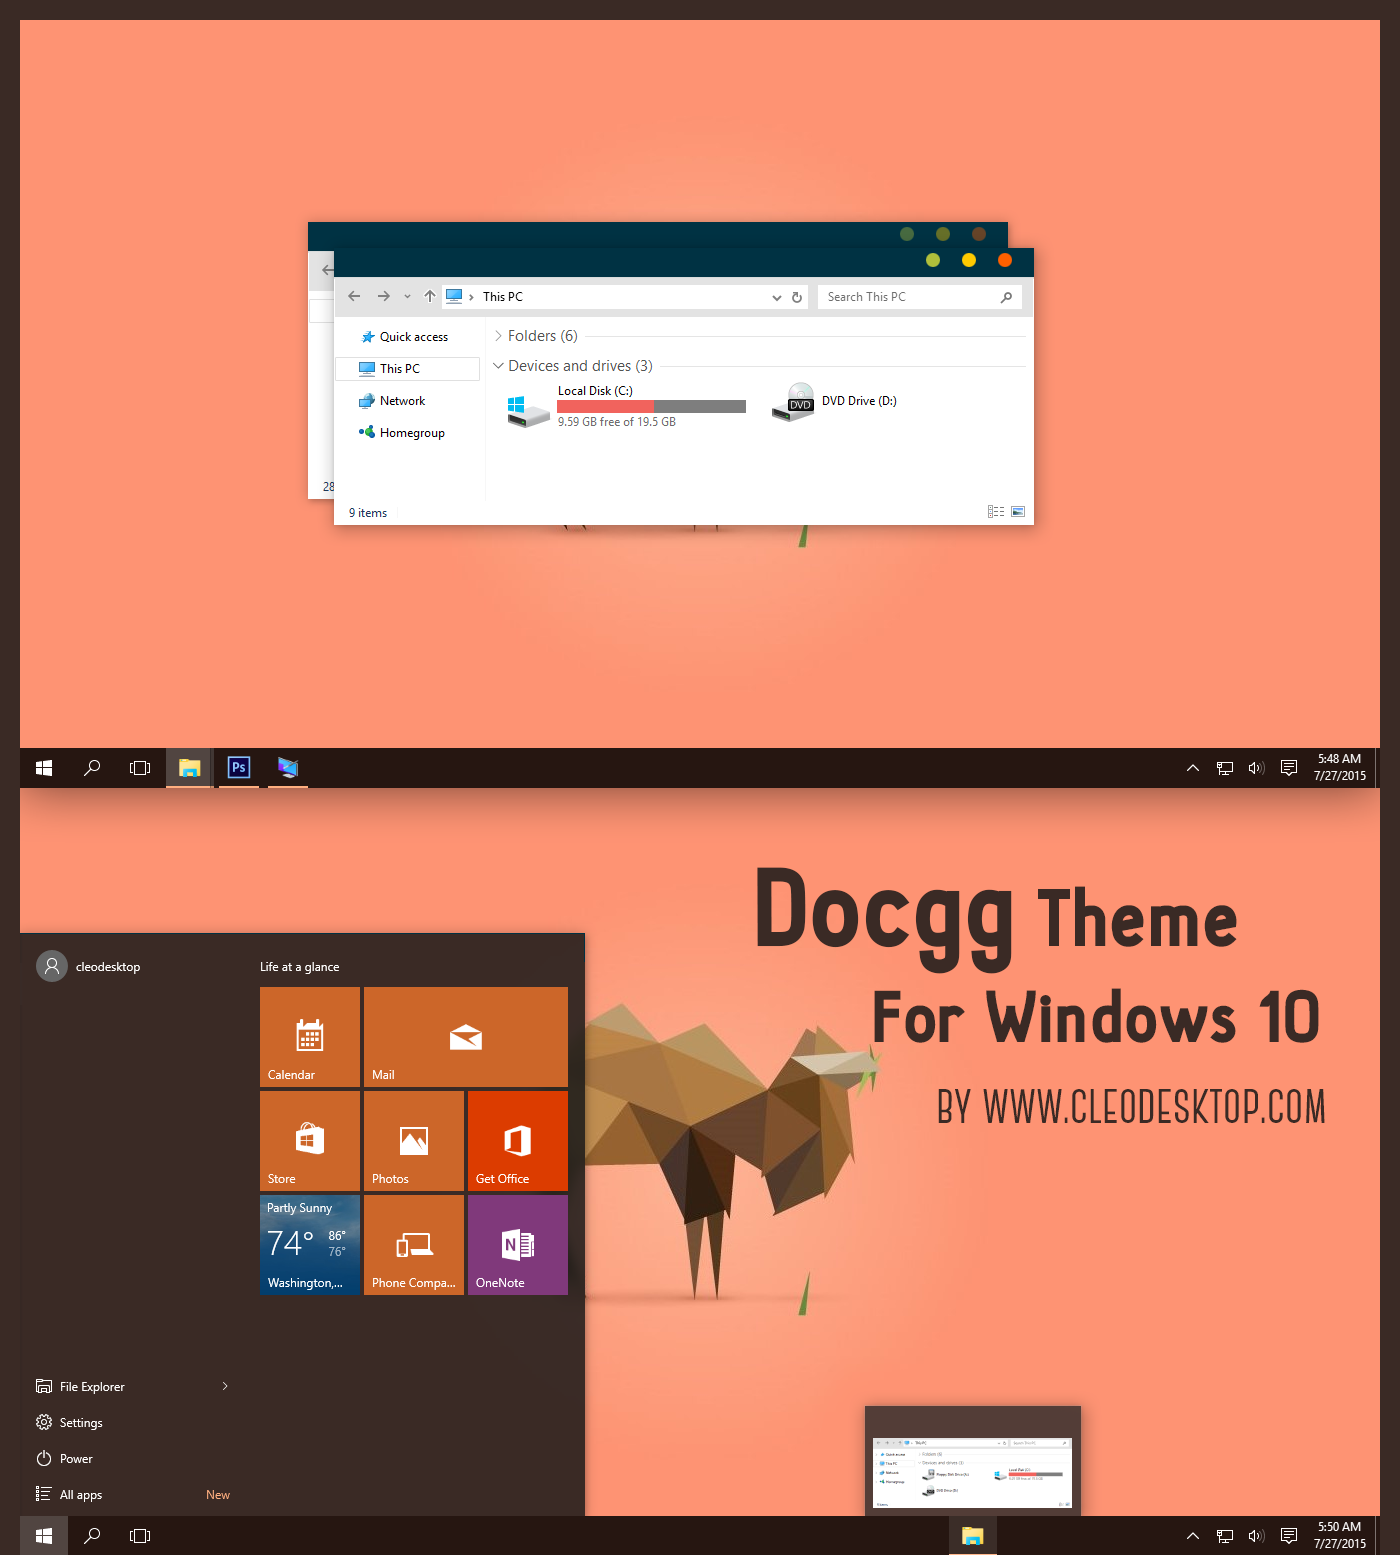 Docgg Theme For Windows 10 RTM